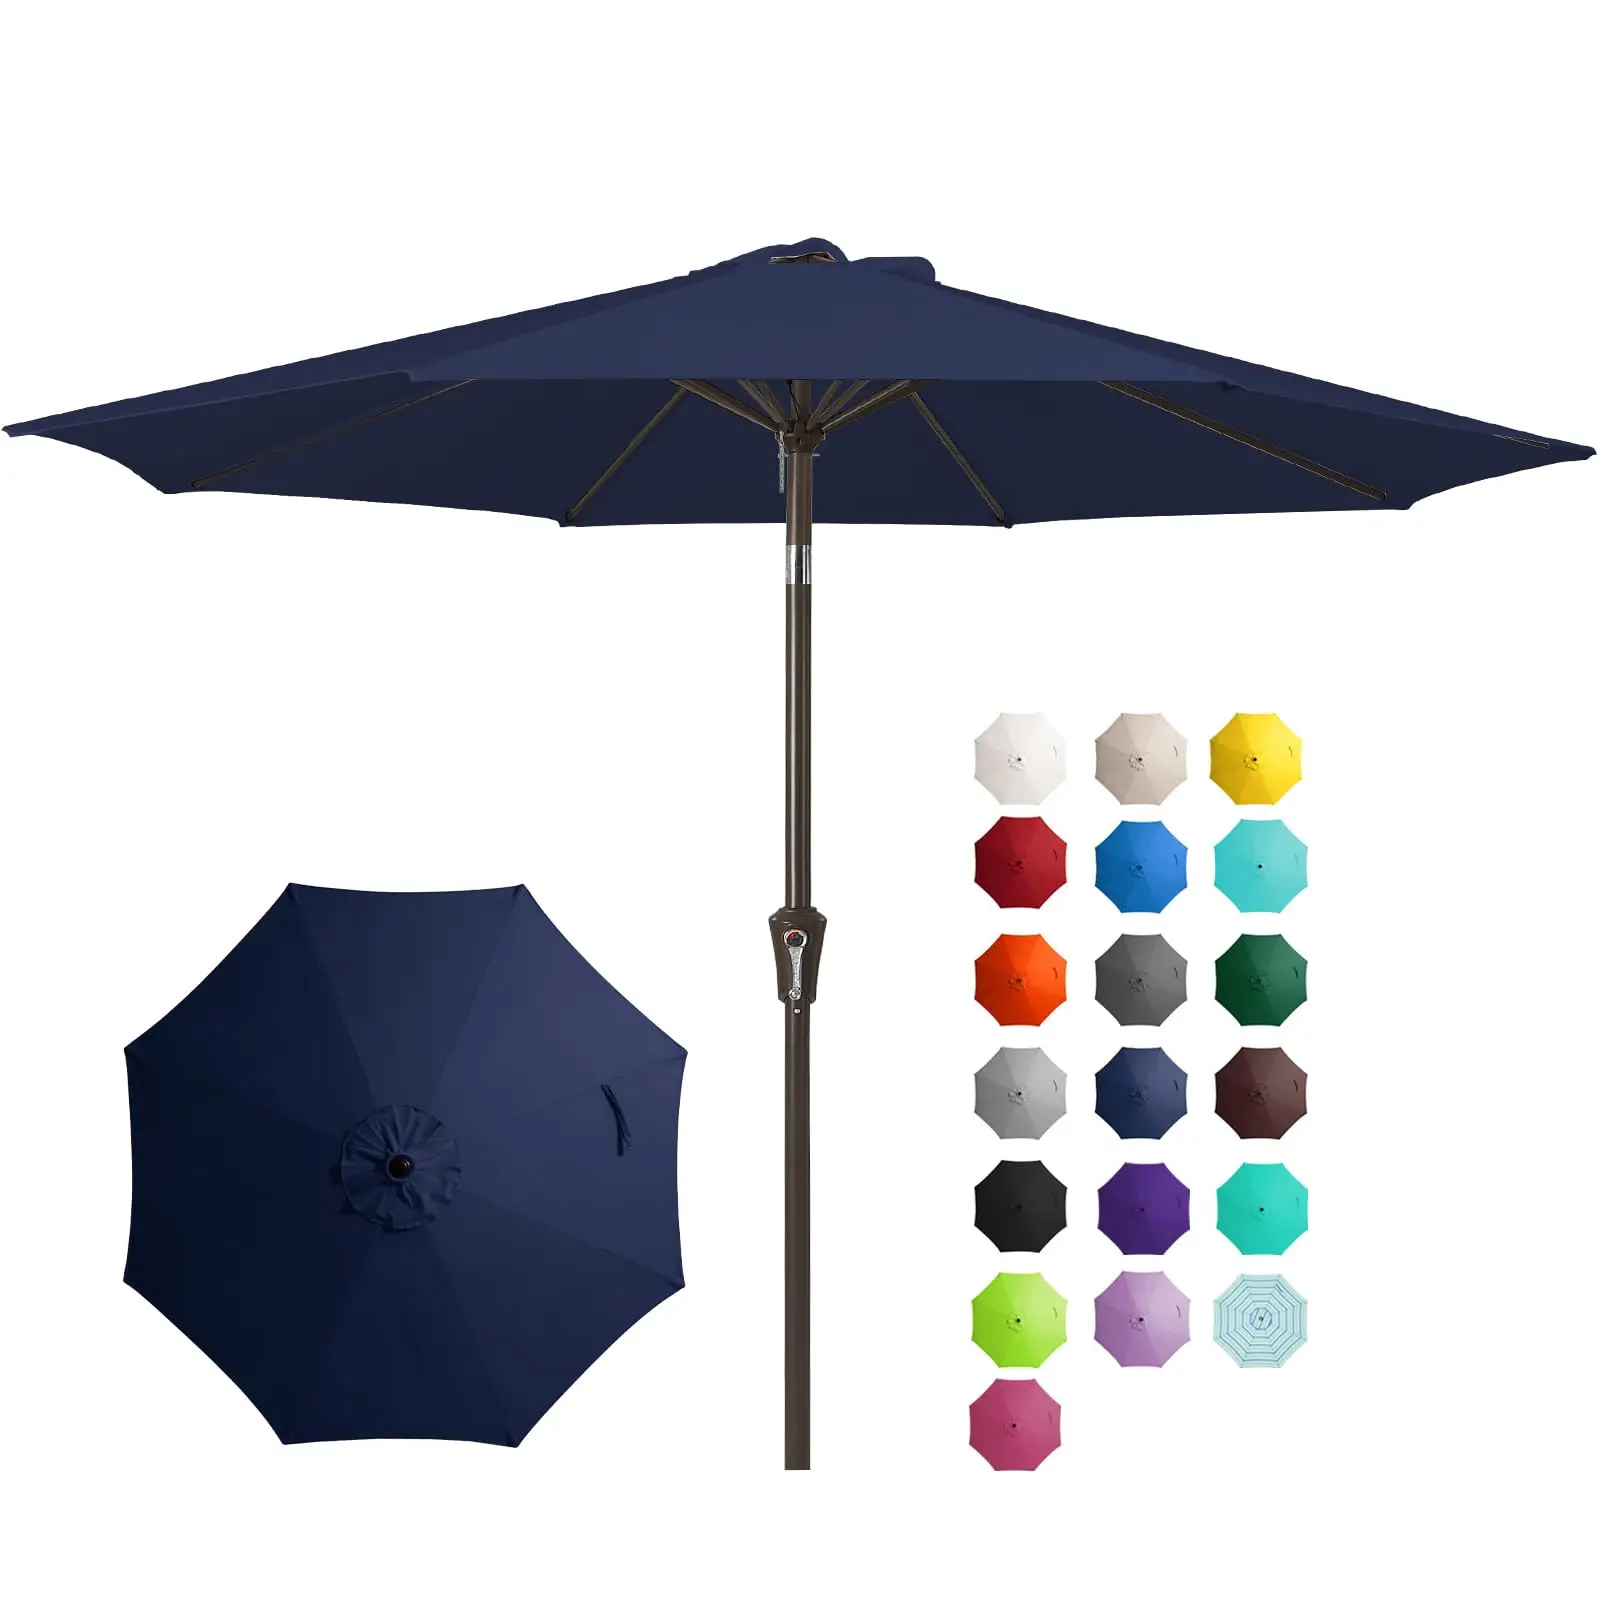 

9FT Outdoor Patio Umbrella Outdoor Table Umbrella, Market Umbrella 8 Sturdy Ribs UV Protection Waterproof for Garden, Navy Blue